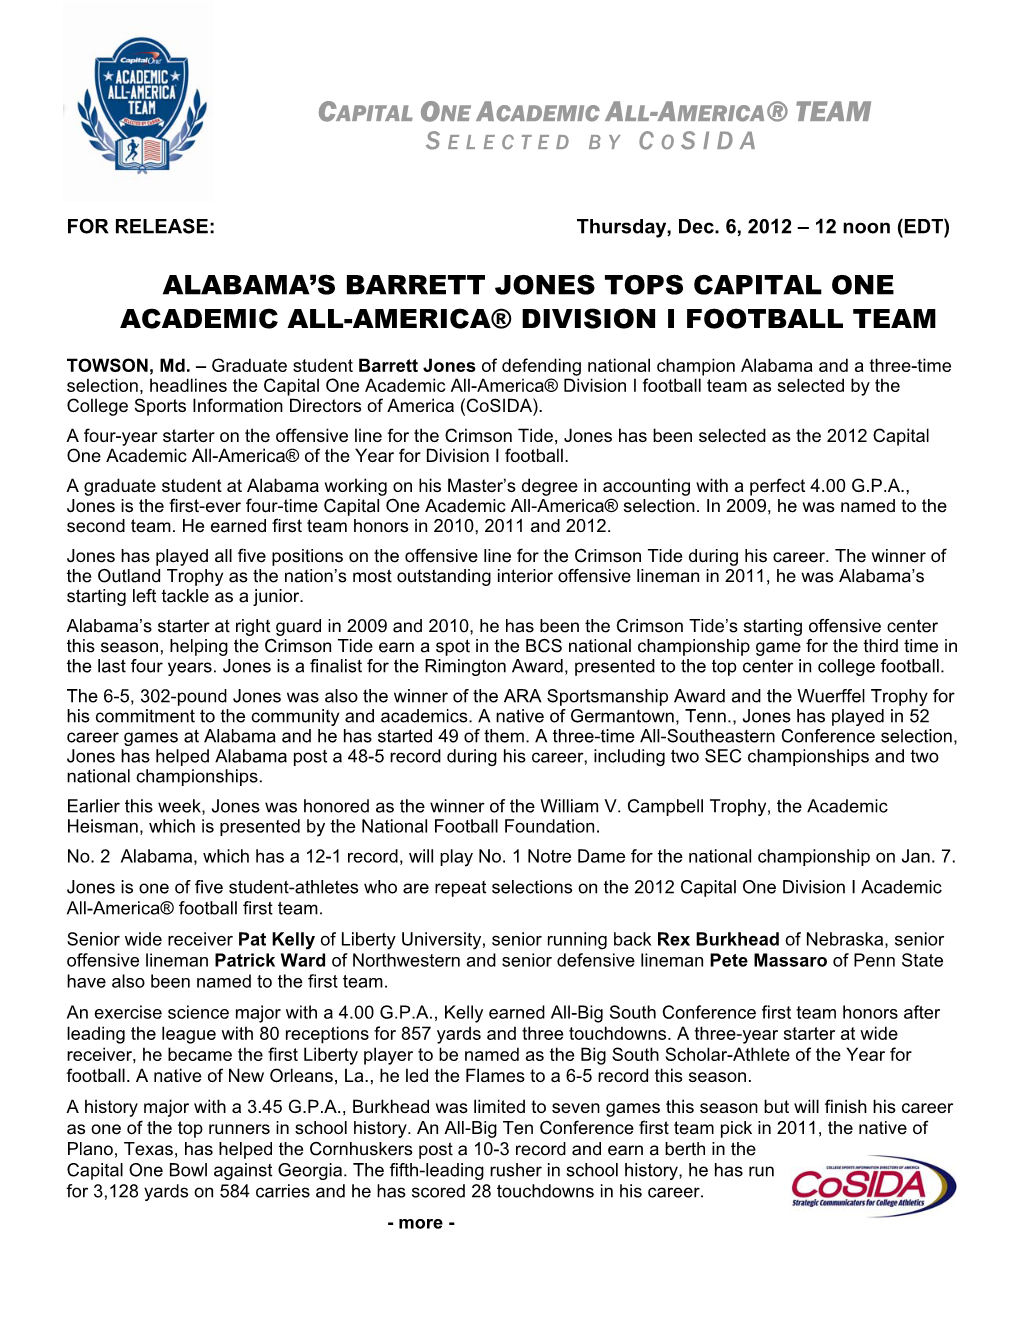 Alabama's Barrett Jones Tops Capital One Academic All